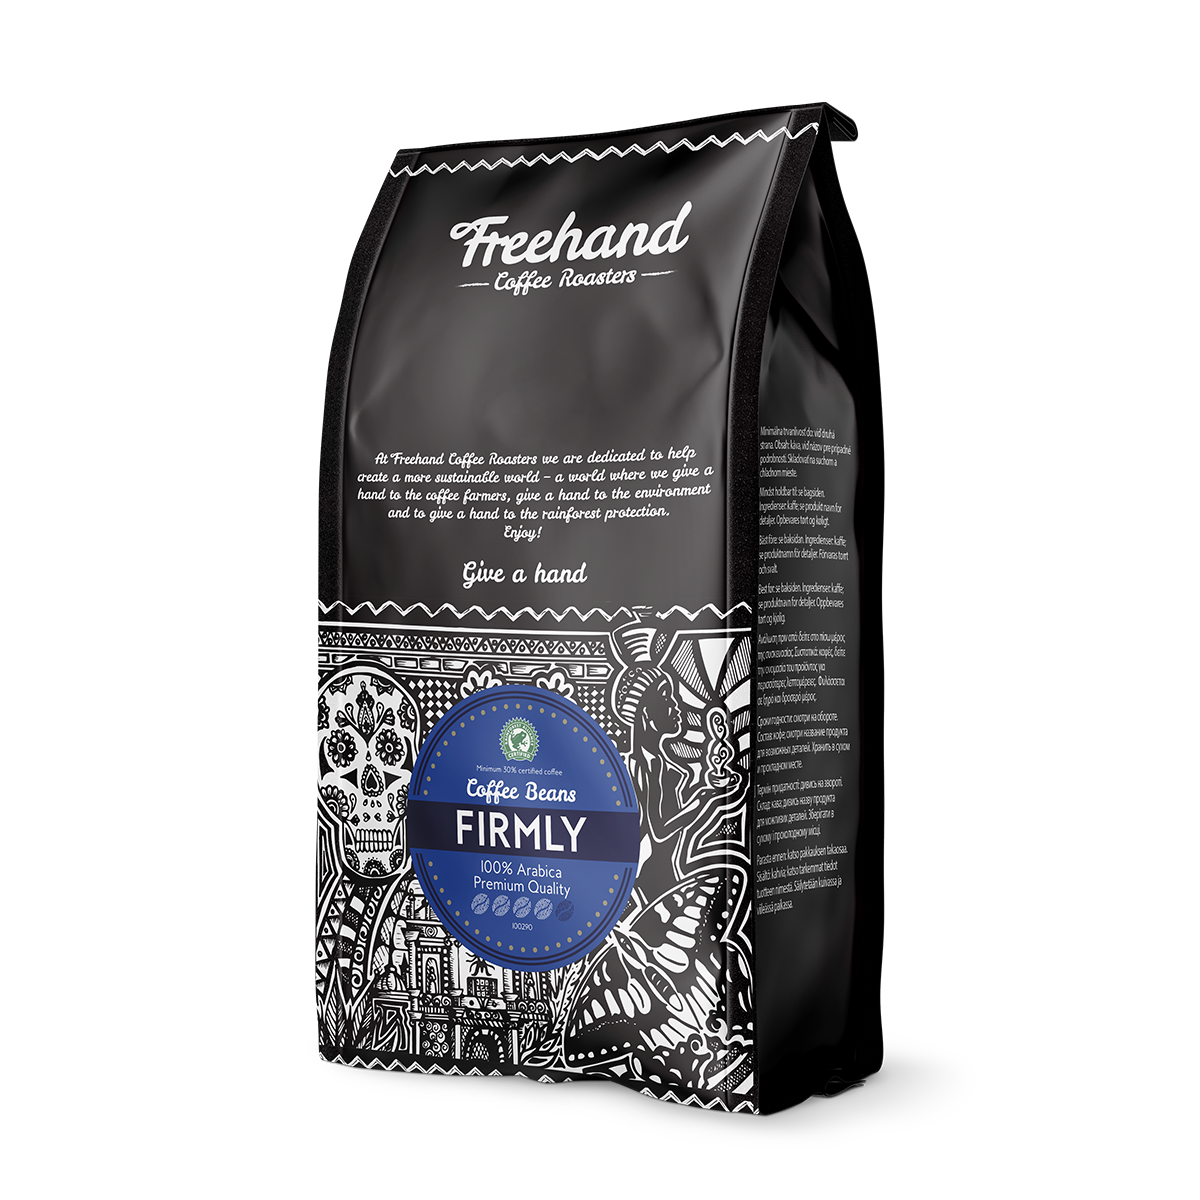 Se Freehand Firmly kaffebønner - 1 kg. hos Freehand Coffee Club